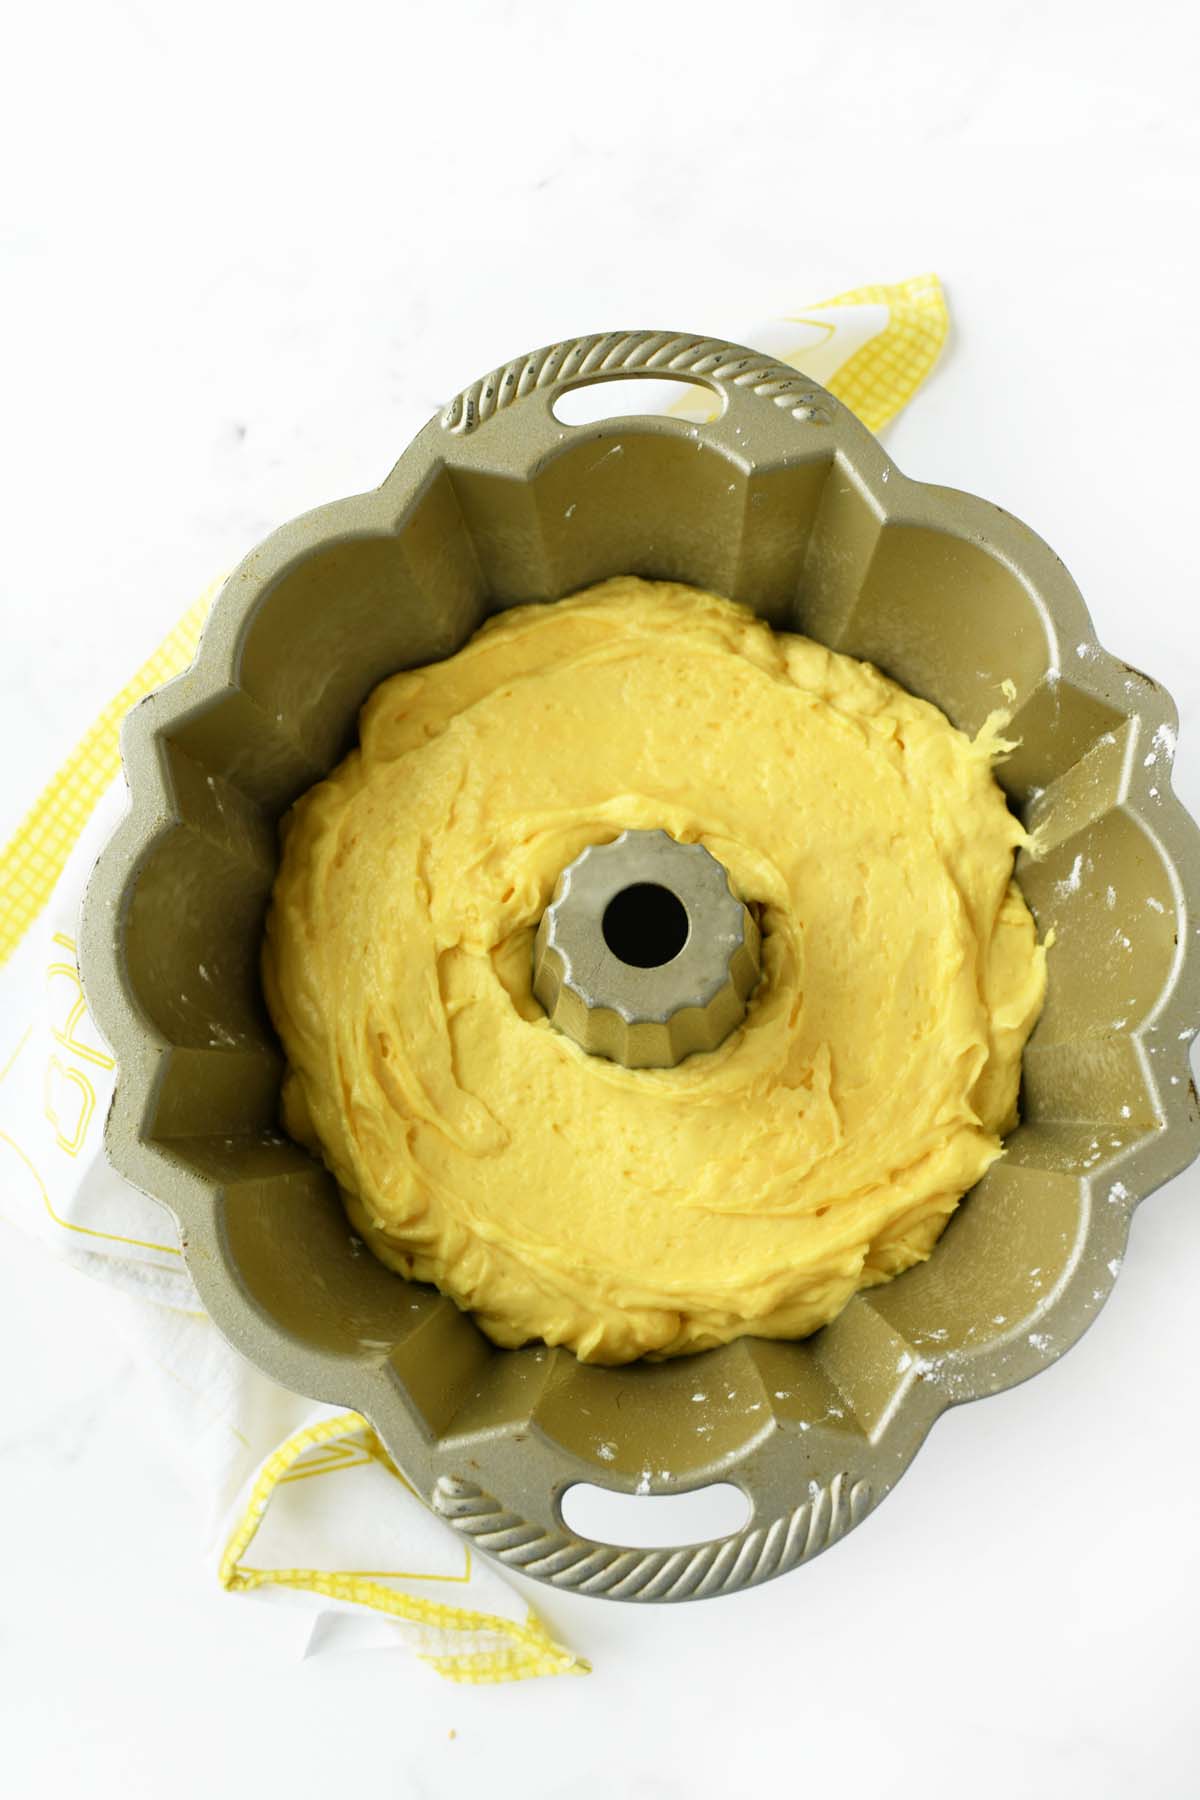 Pineapple cake batter in bundt pan.